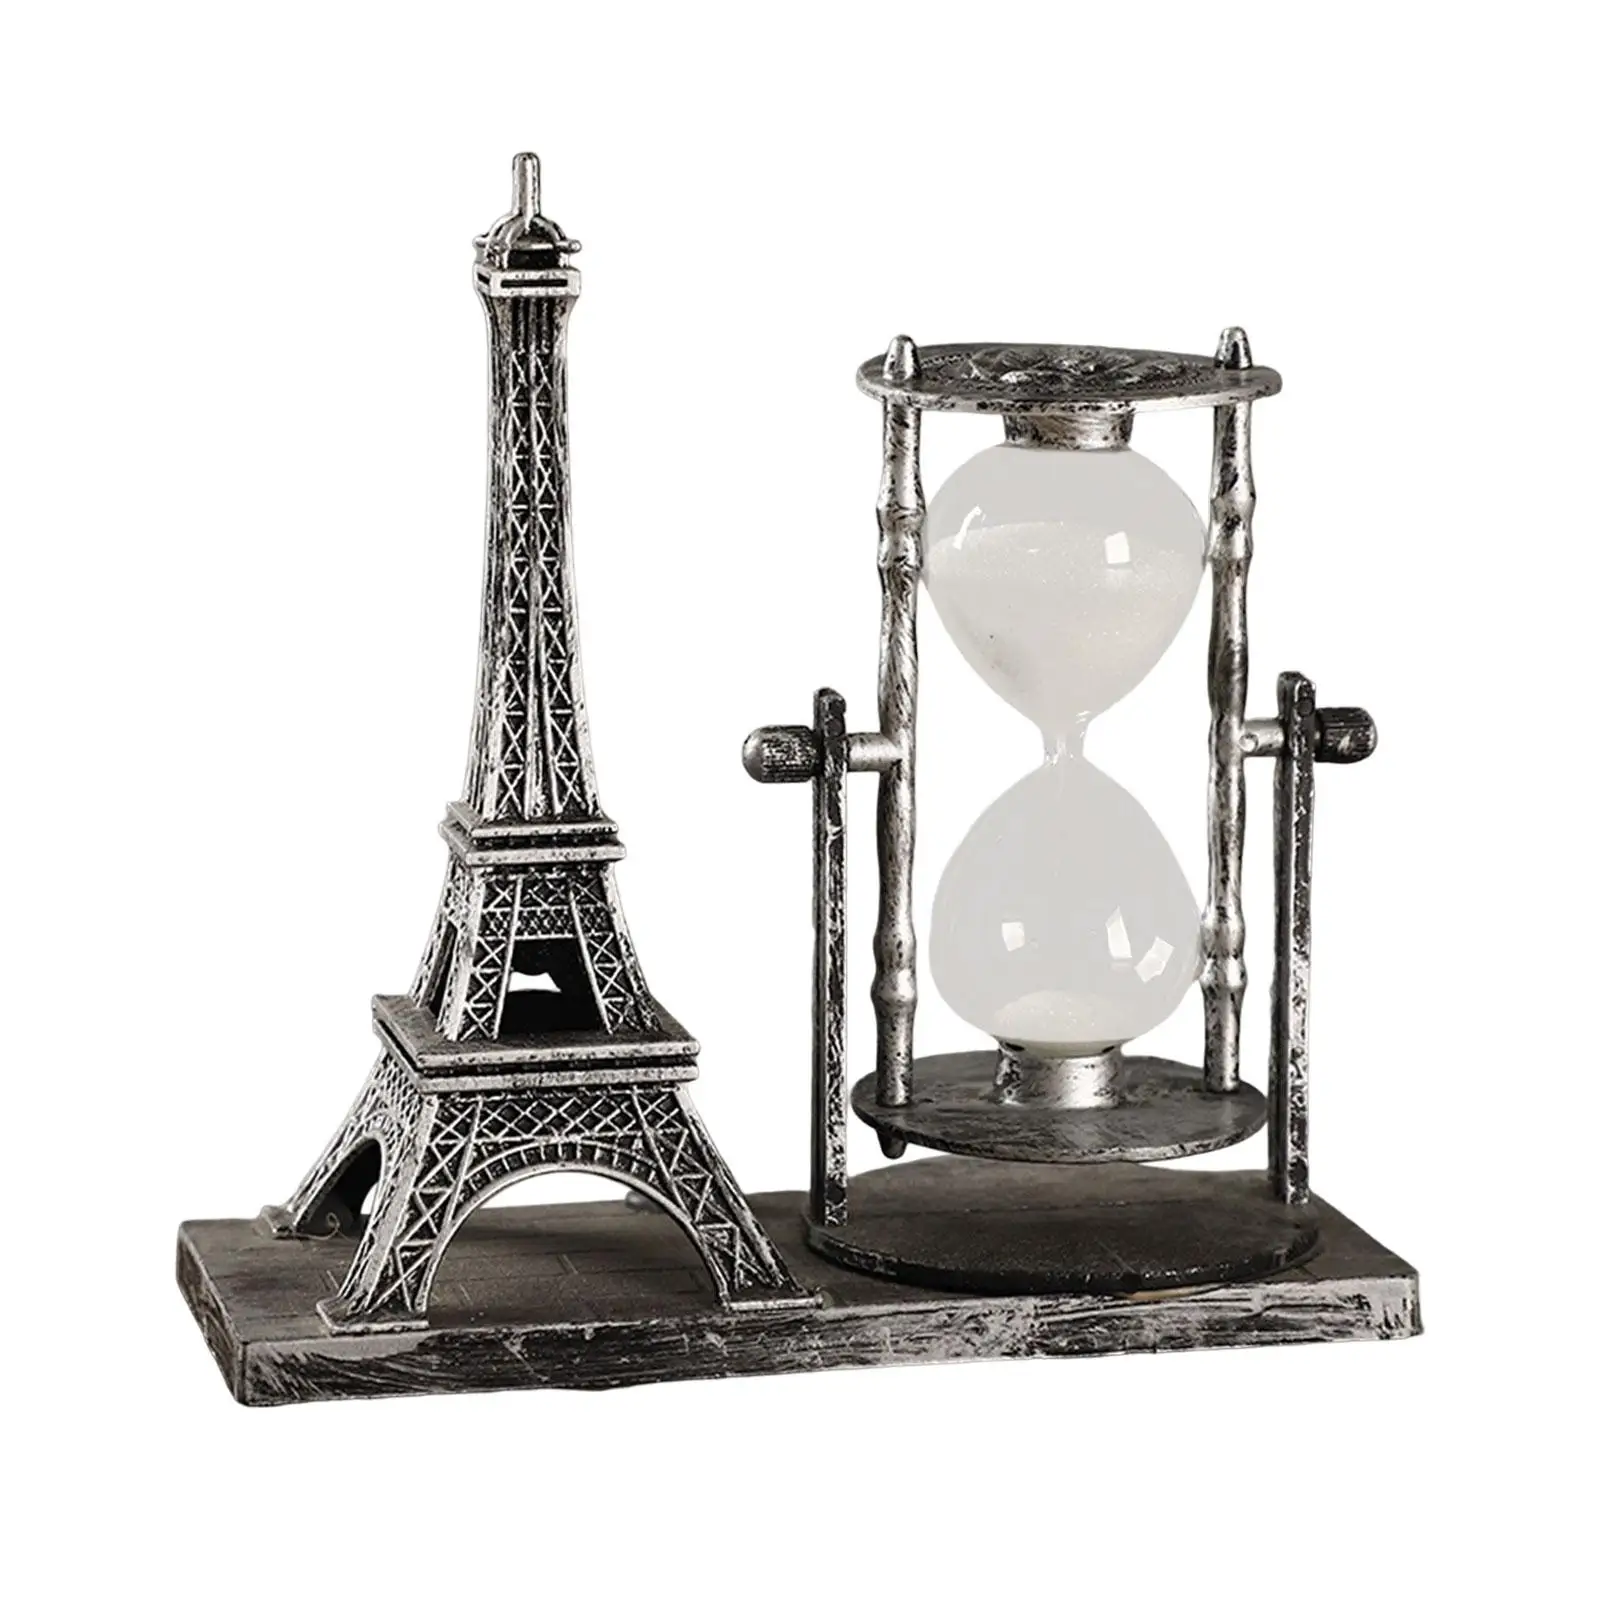 Retro Style Iron Hourglass Timer Statue Decor for